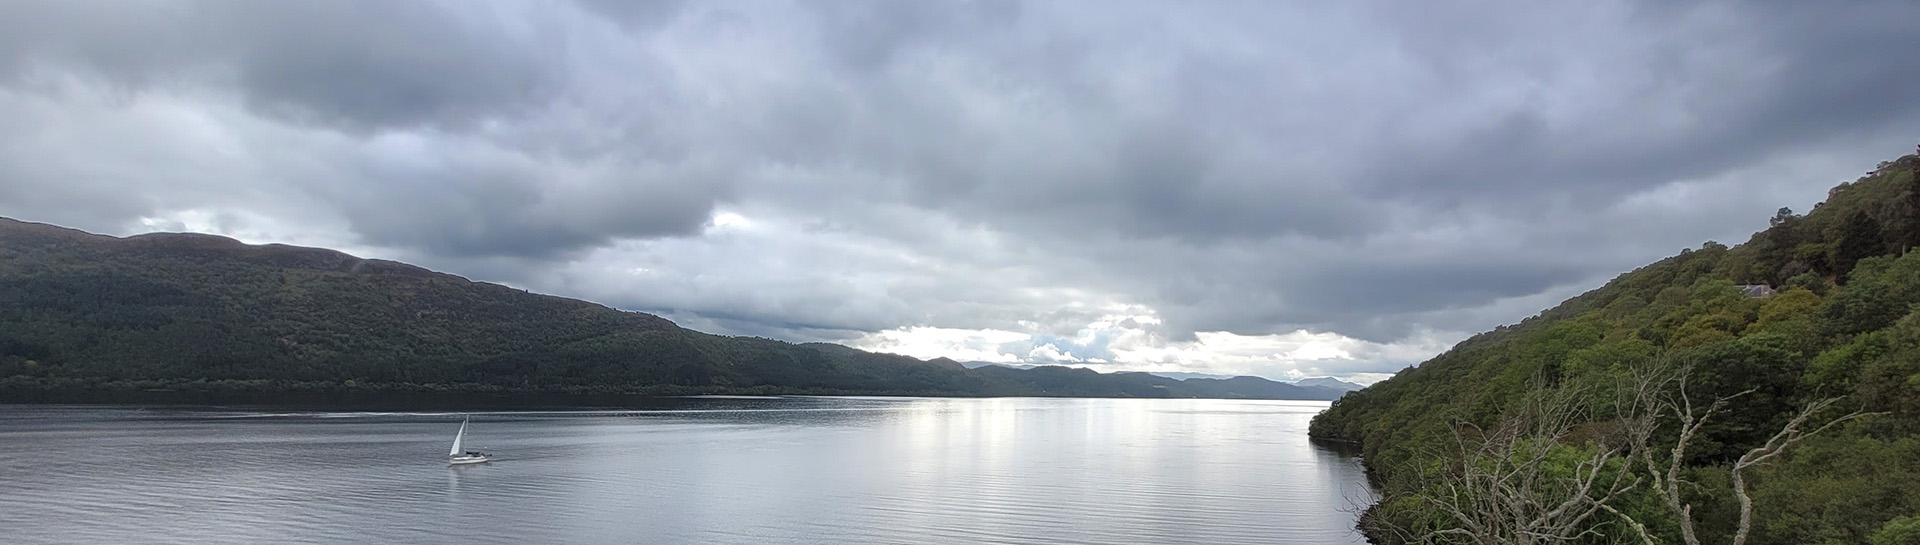 Ecosse, le Loch Ness